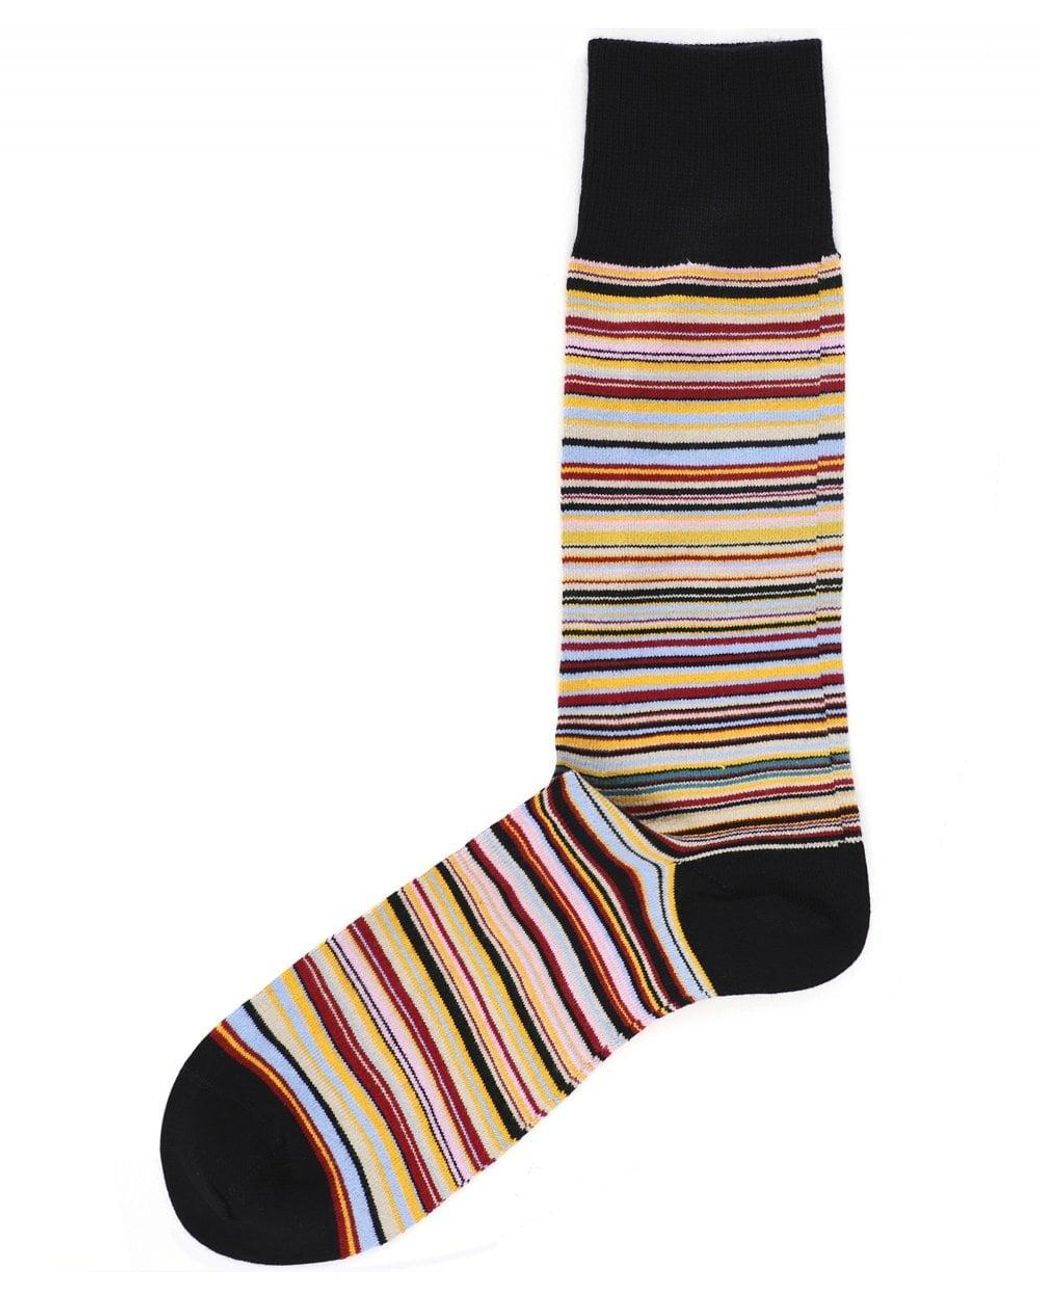 Paul Smith Cotton Signature Stripe Socks for Men - Lyst